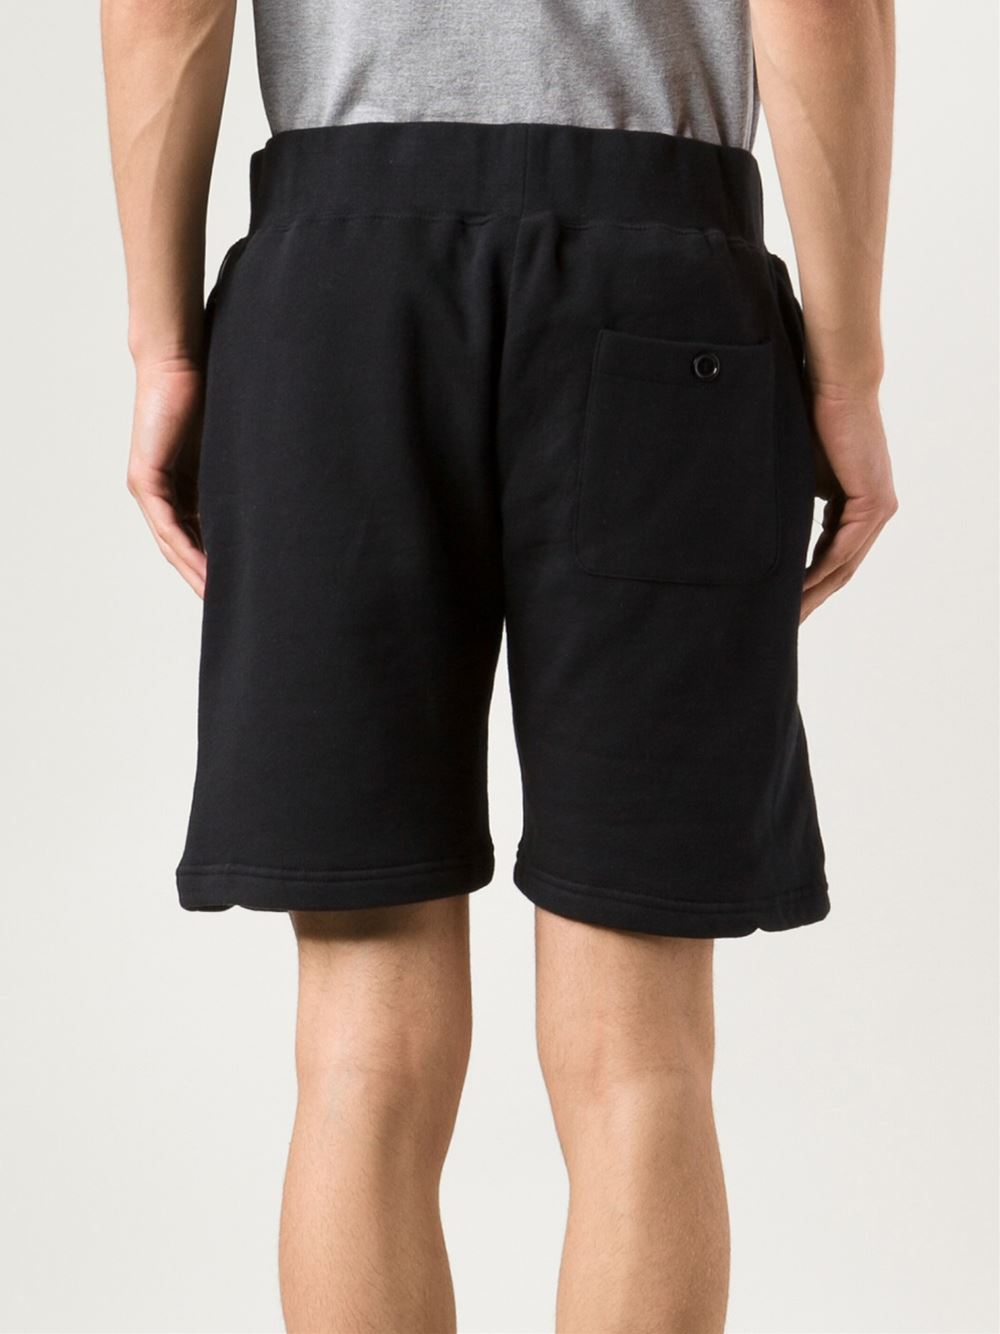 Lyst - Stussy Sweat Shorts in Black for Men